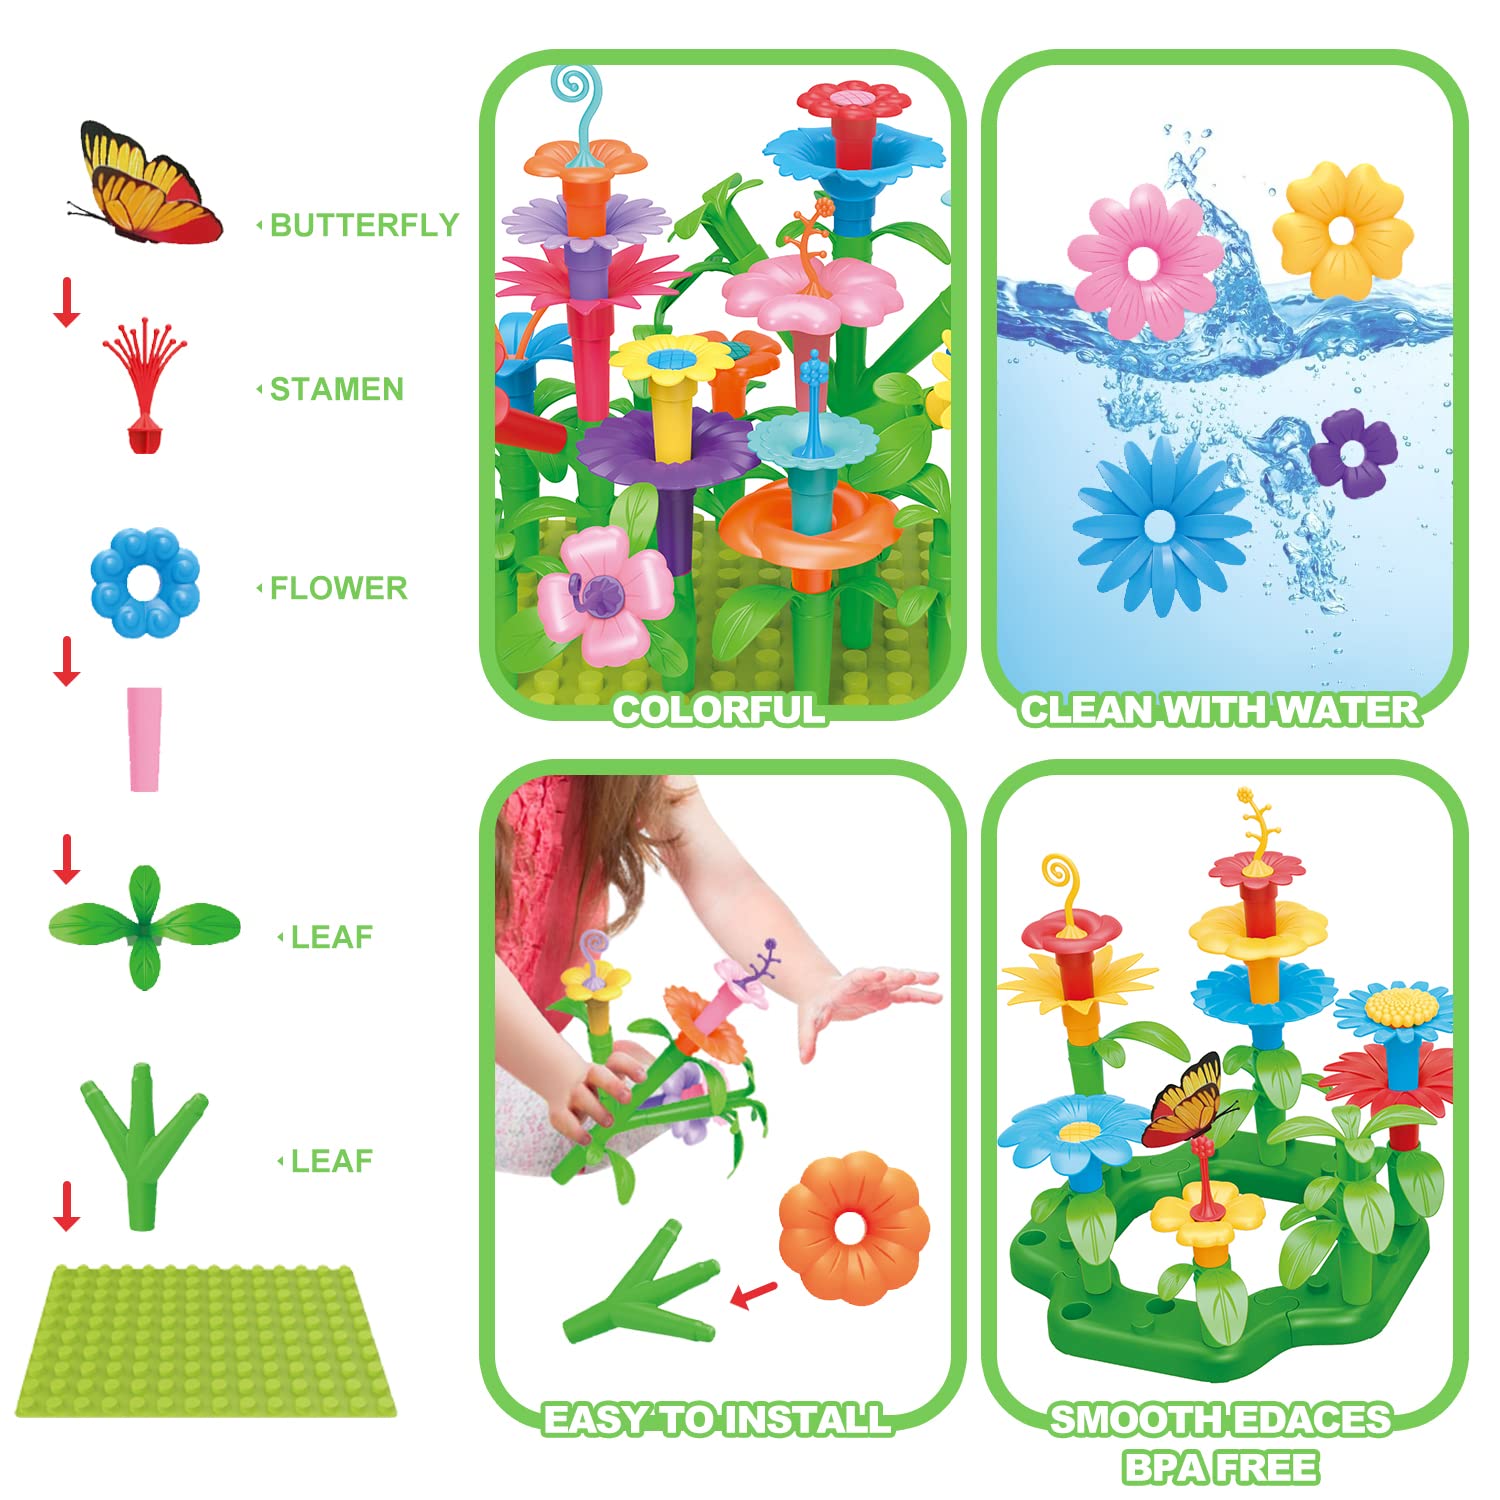 213 pcs Flower Garden Building Toys for 3, 4, 5, 6 Year Old Girls, STEM Educational Activity for Preschool, Gardening Pretend Toys Kit, Christmas & Birthday Gift for Kids & Toddler Toys Age 2-4